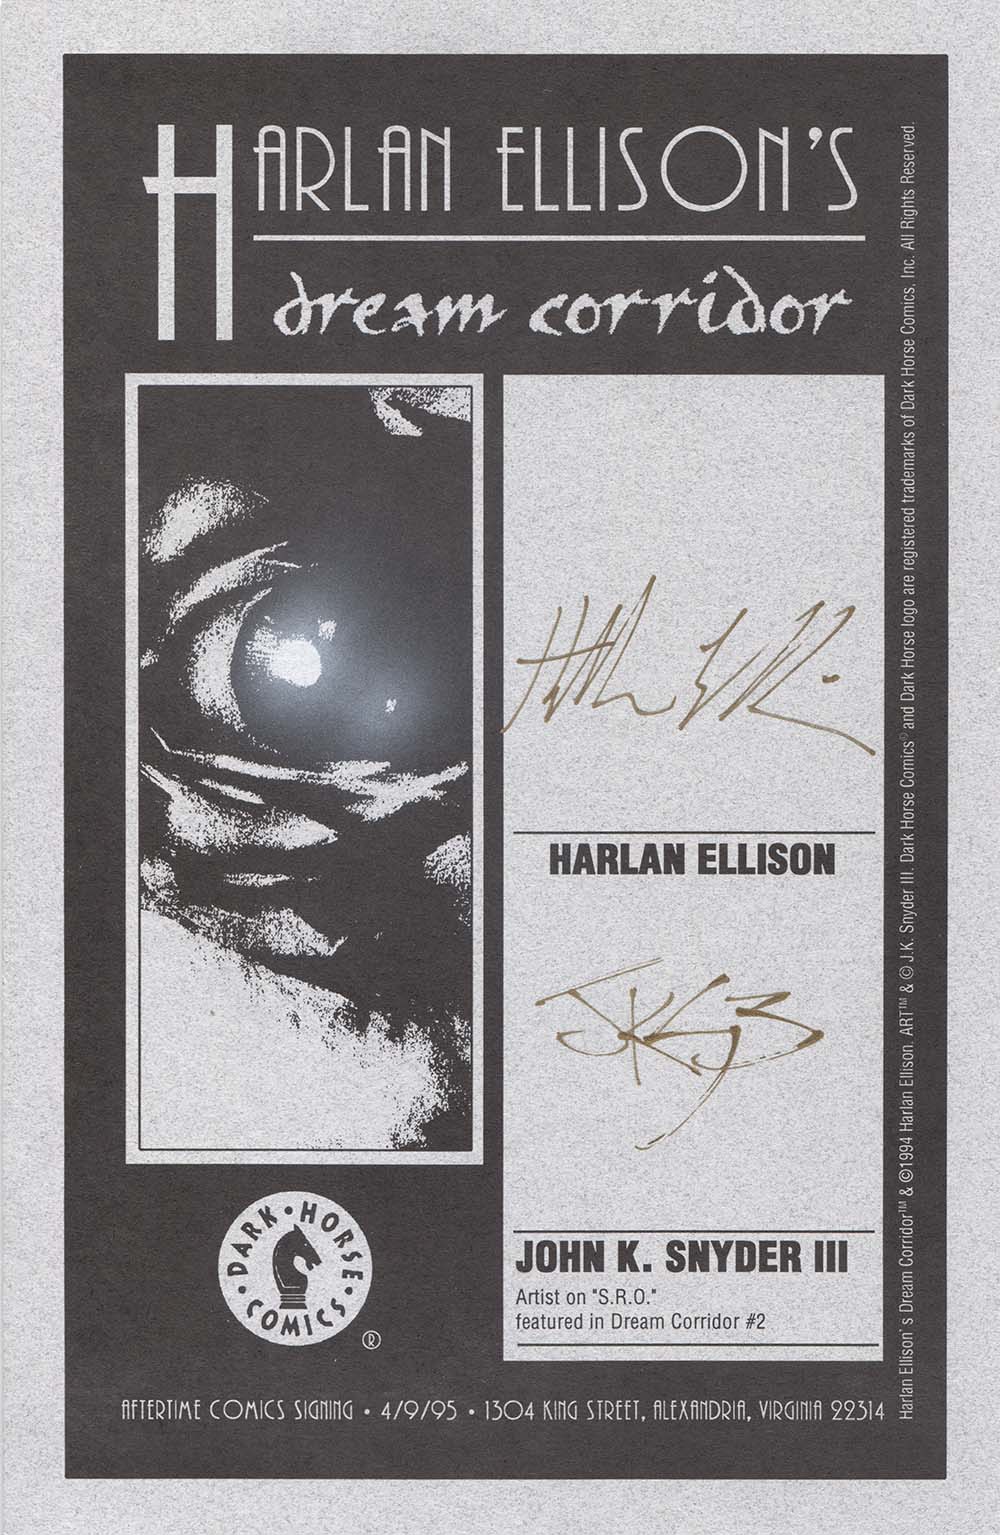 Harlan Ellison's Dream Corridor #2, signed book plate, art by John K. Snyder III